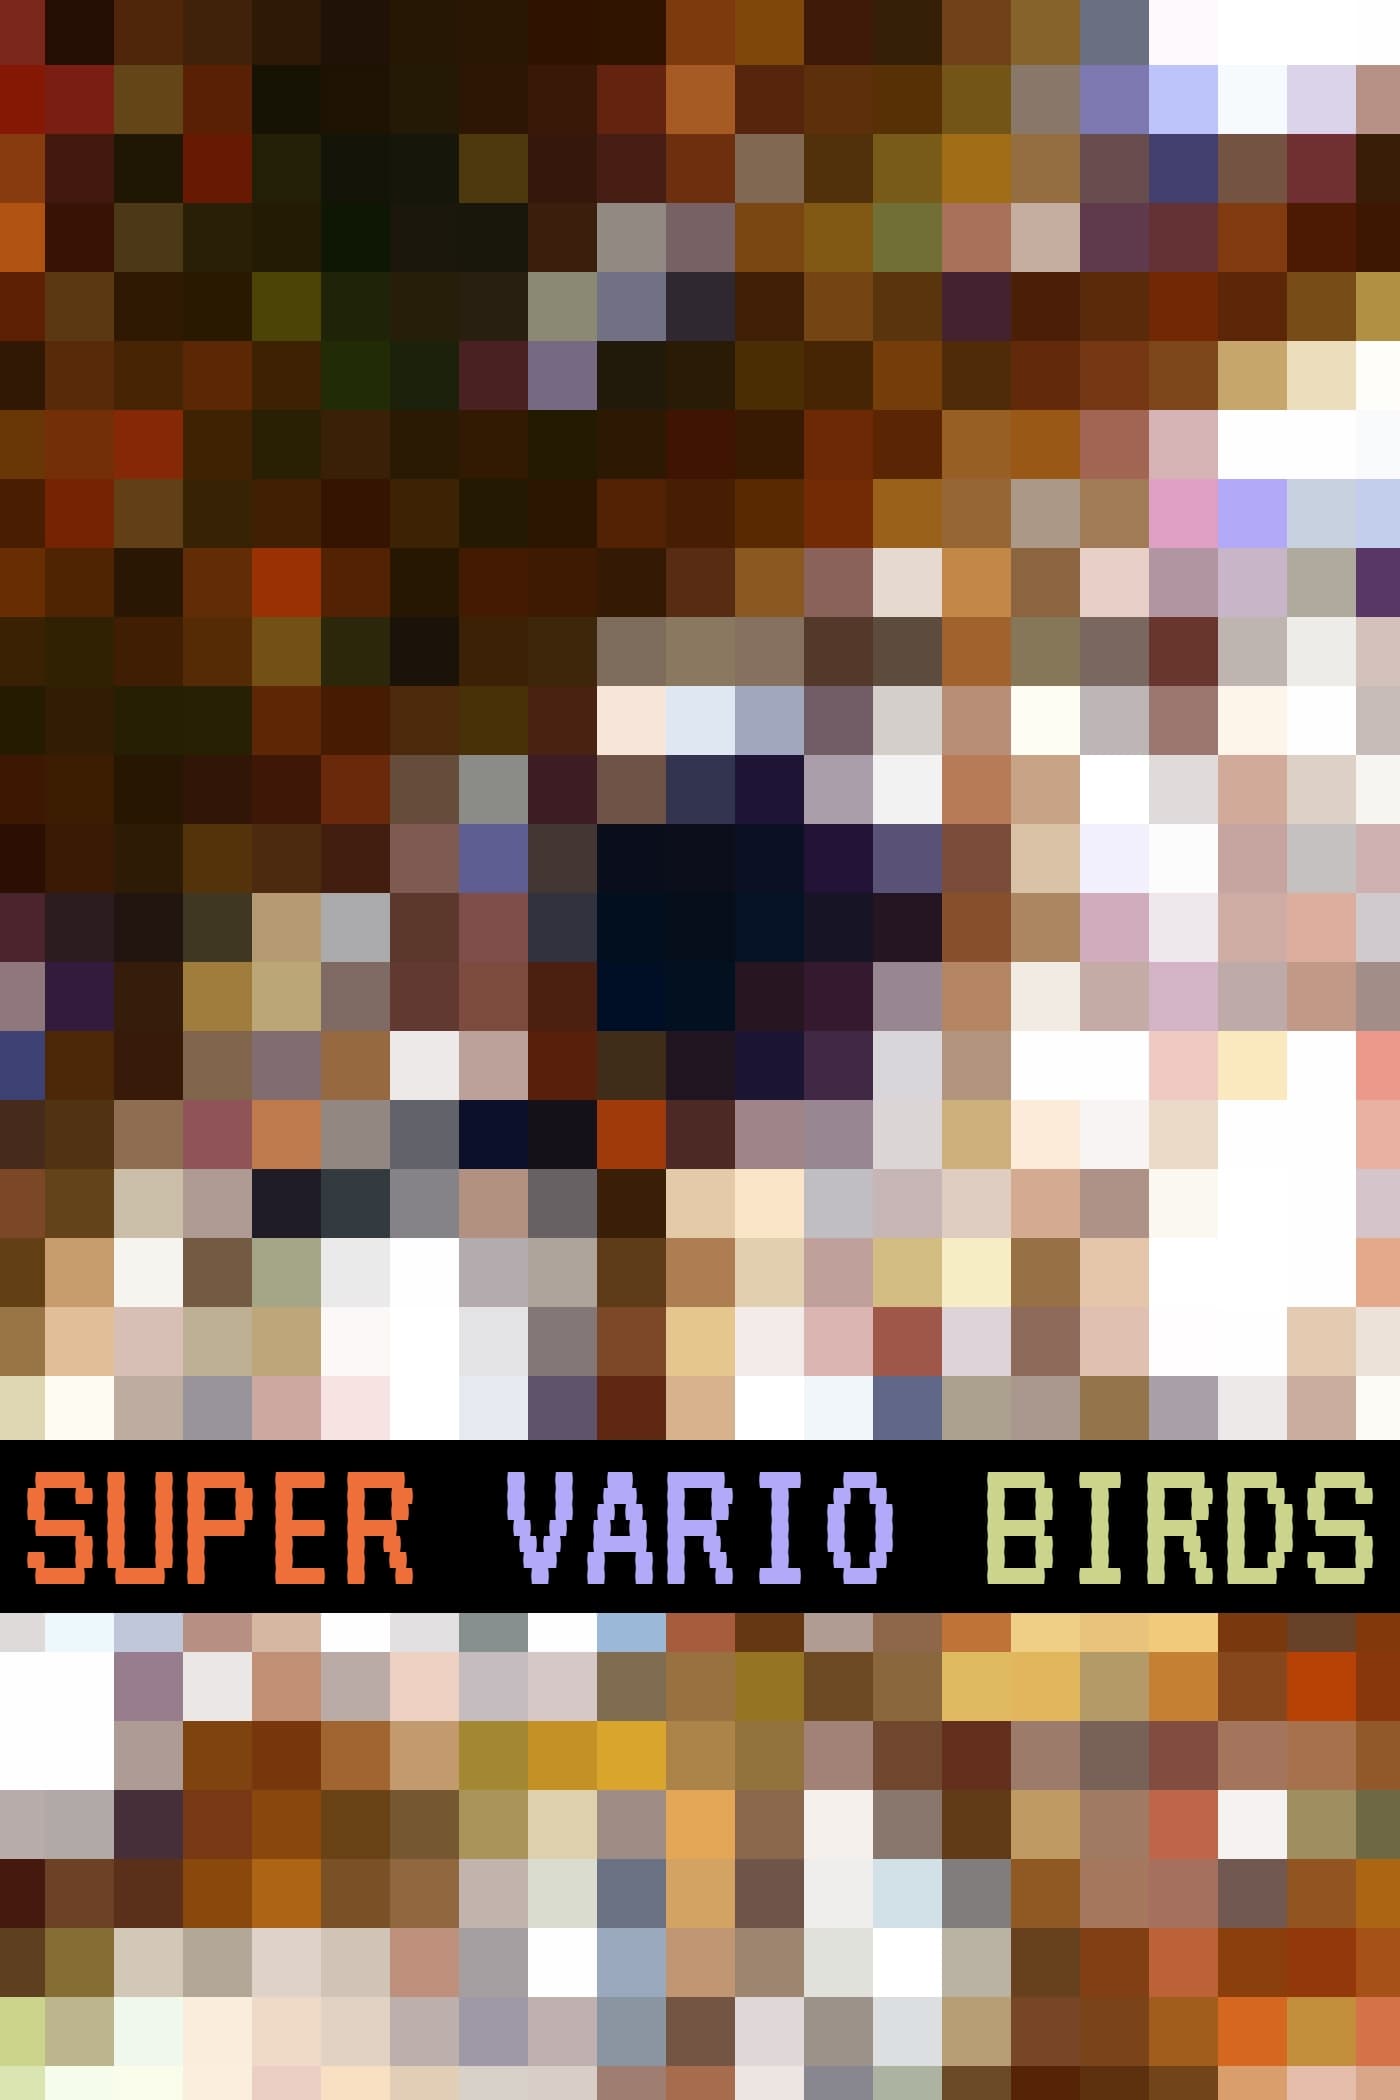 Super Vario Birds